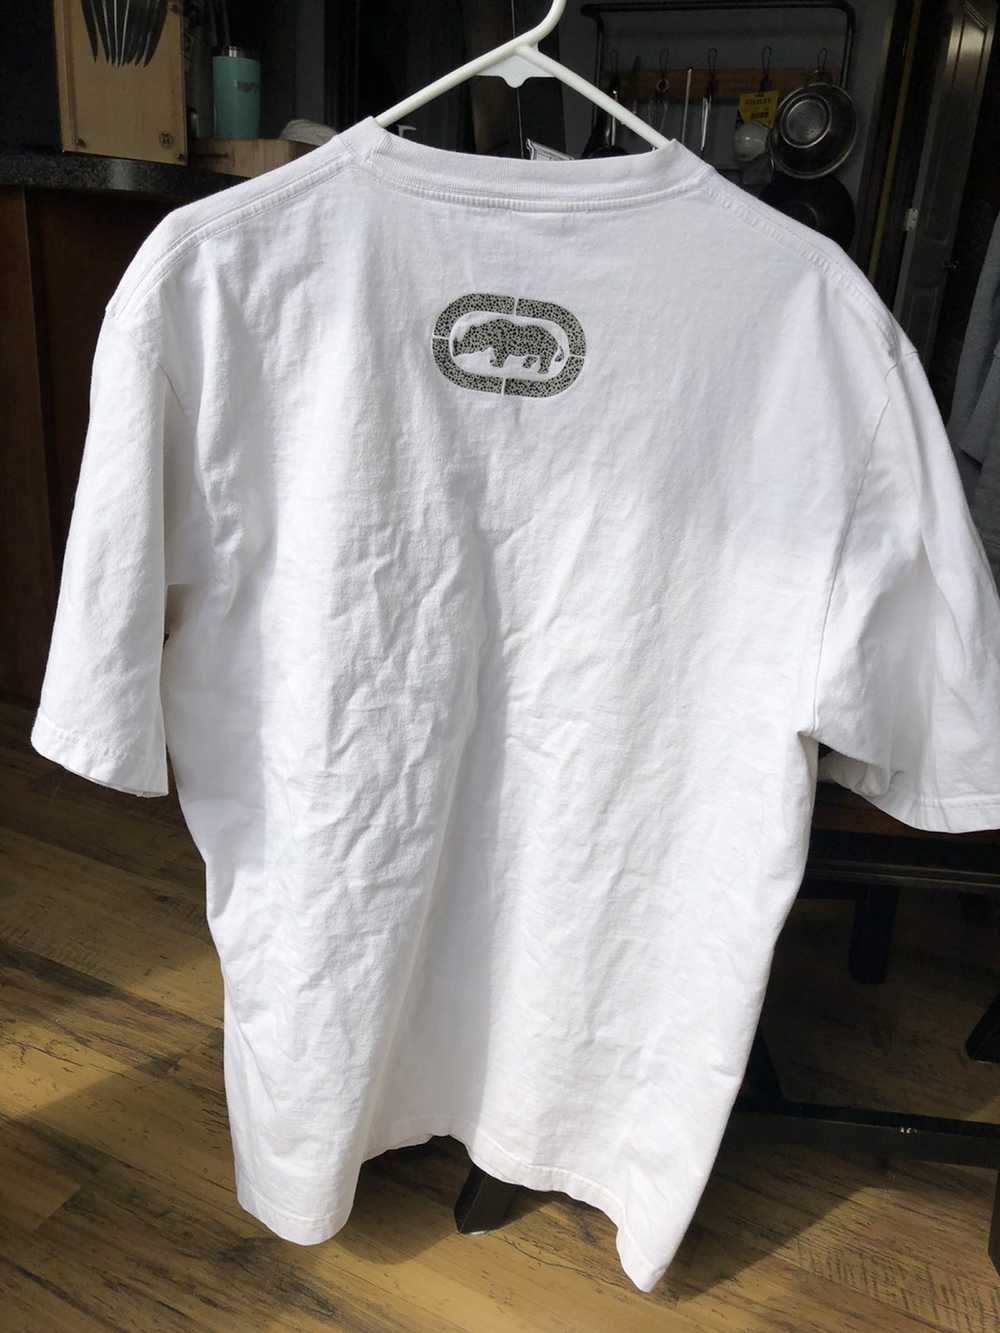 Ecko Unltd. Sneakers ruined my life shirt. White … - image 4